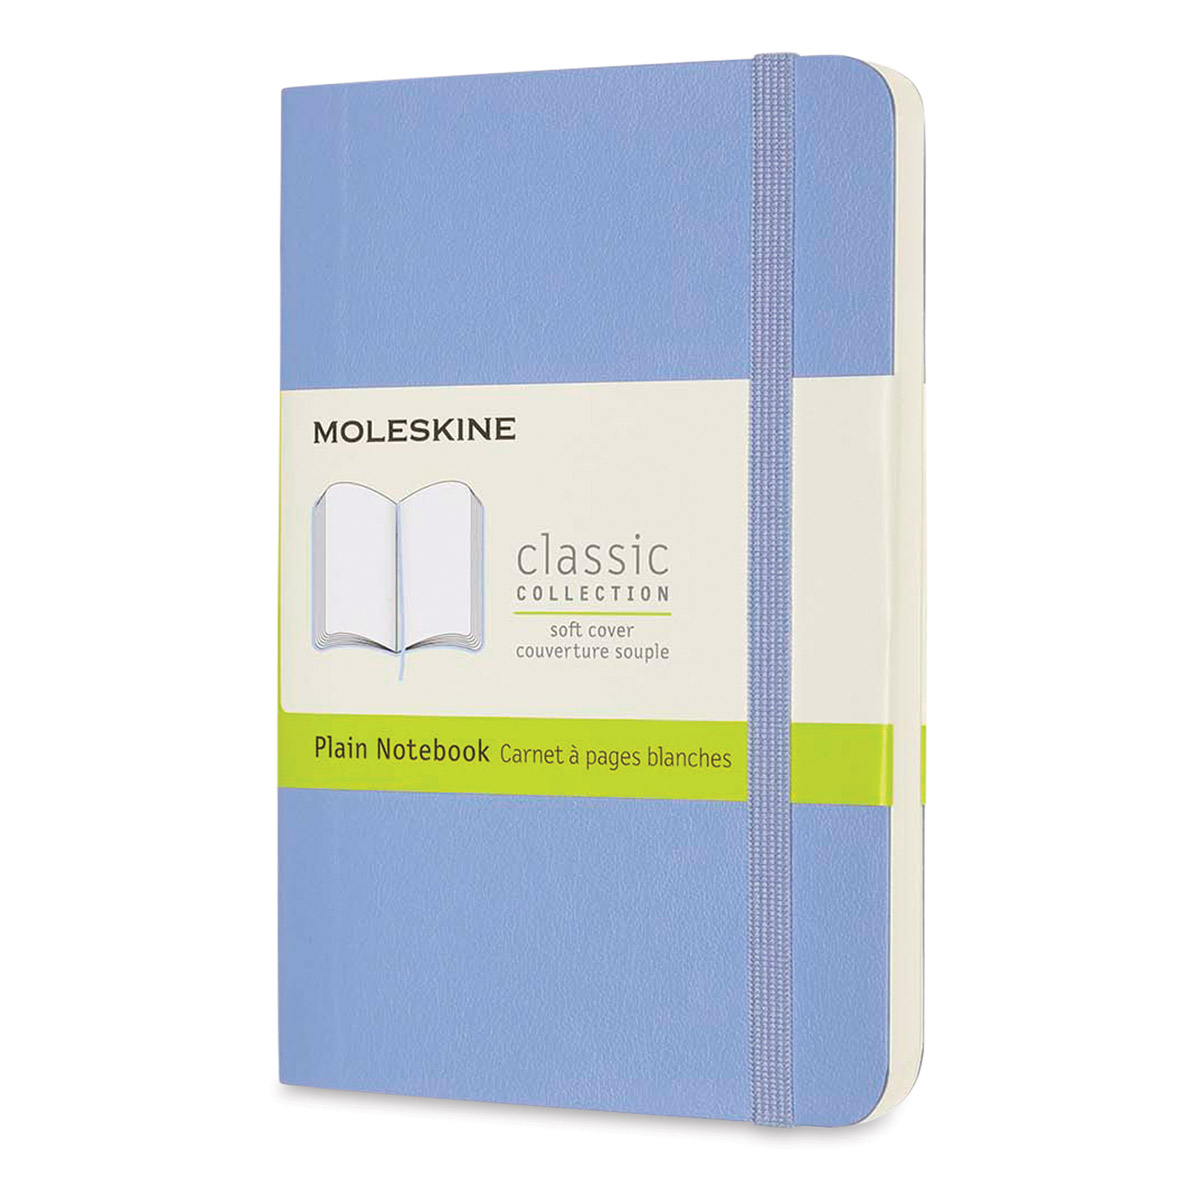 Moleskine Classic Soft Cover Notebook - Light Blue, Blank, 5-1/2